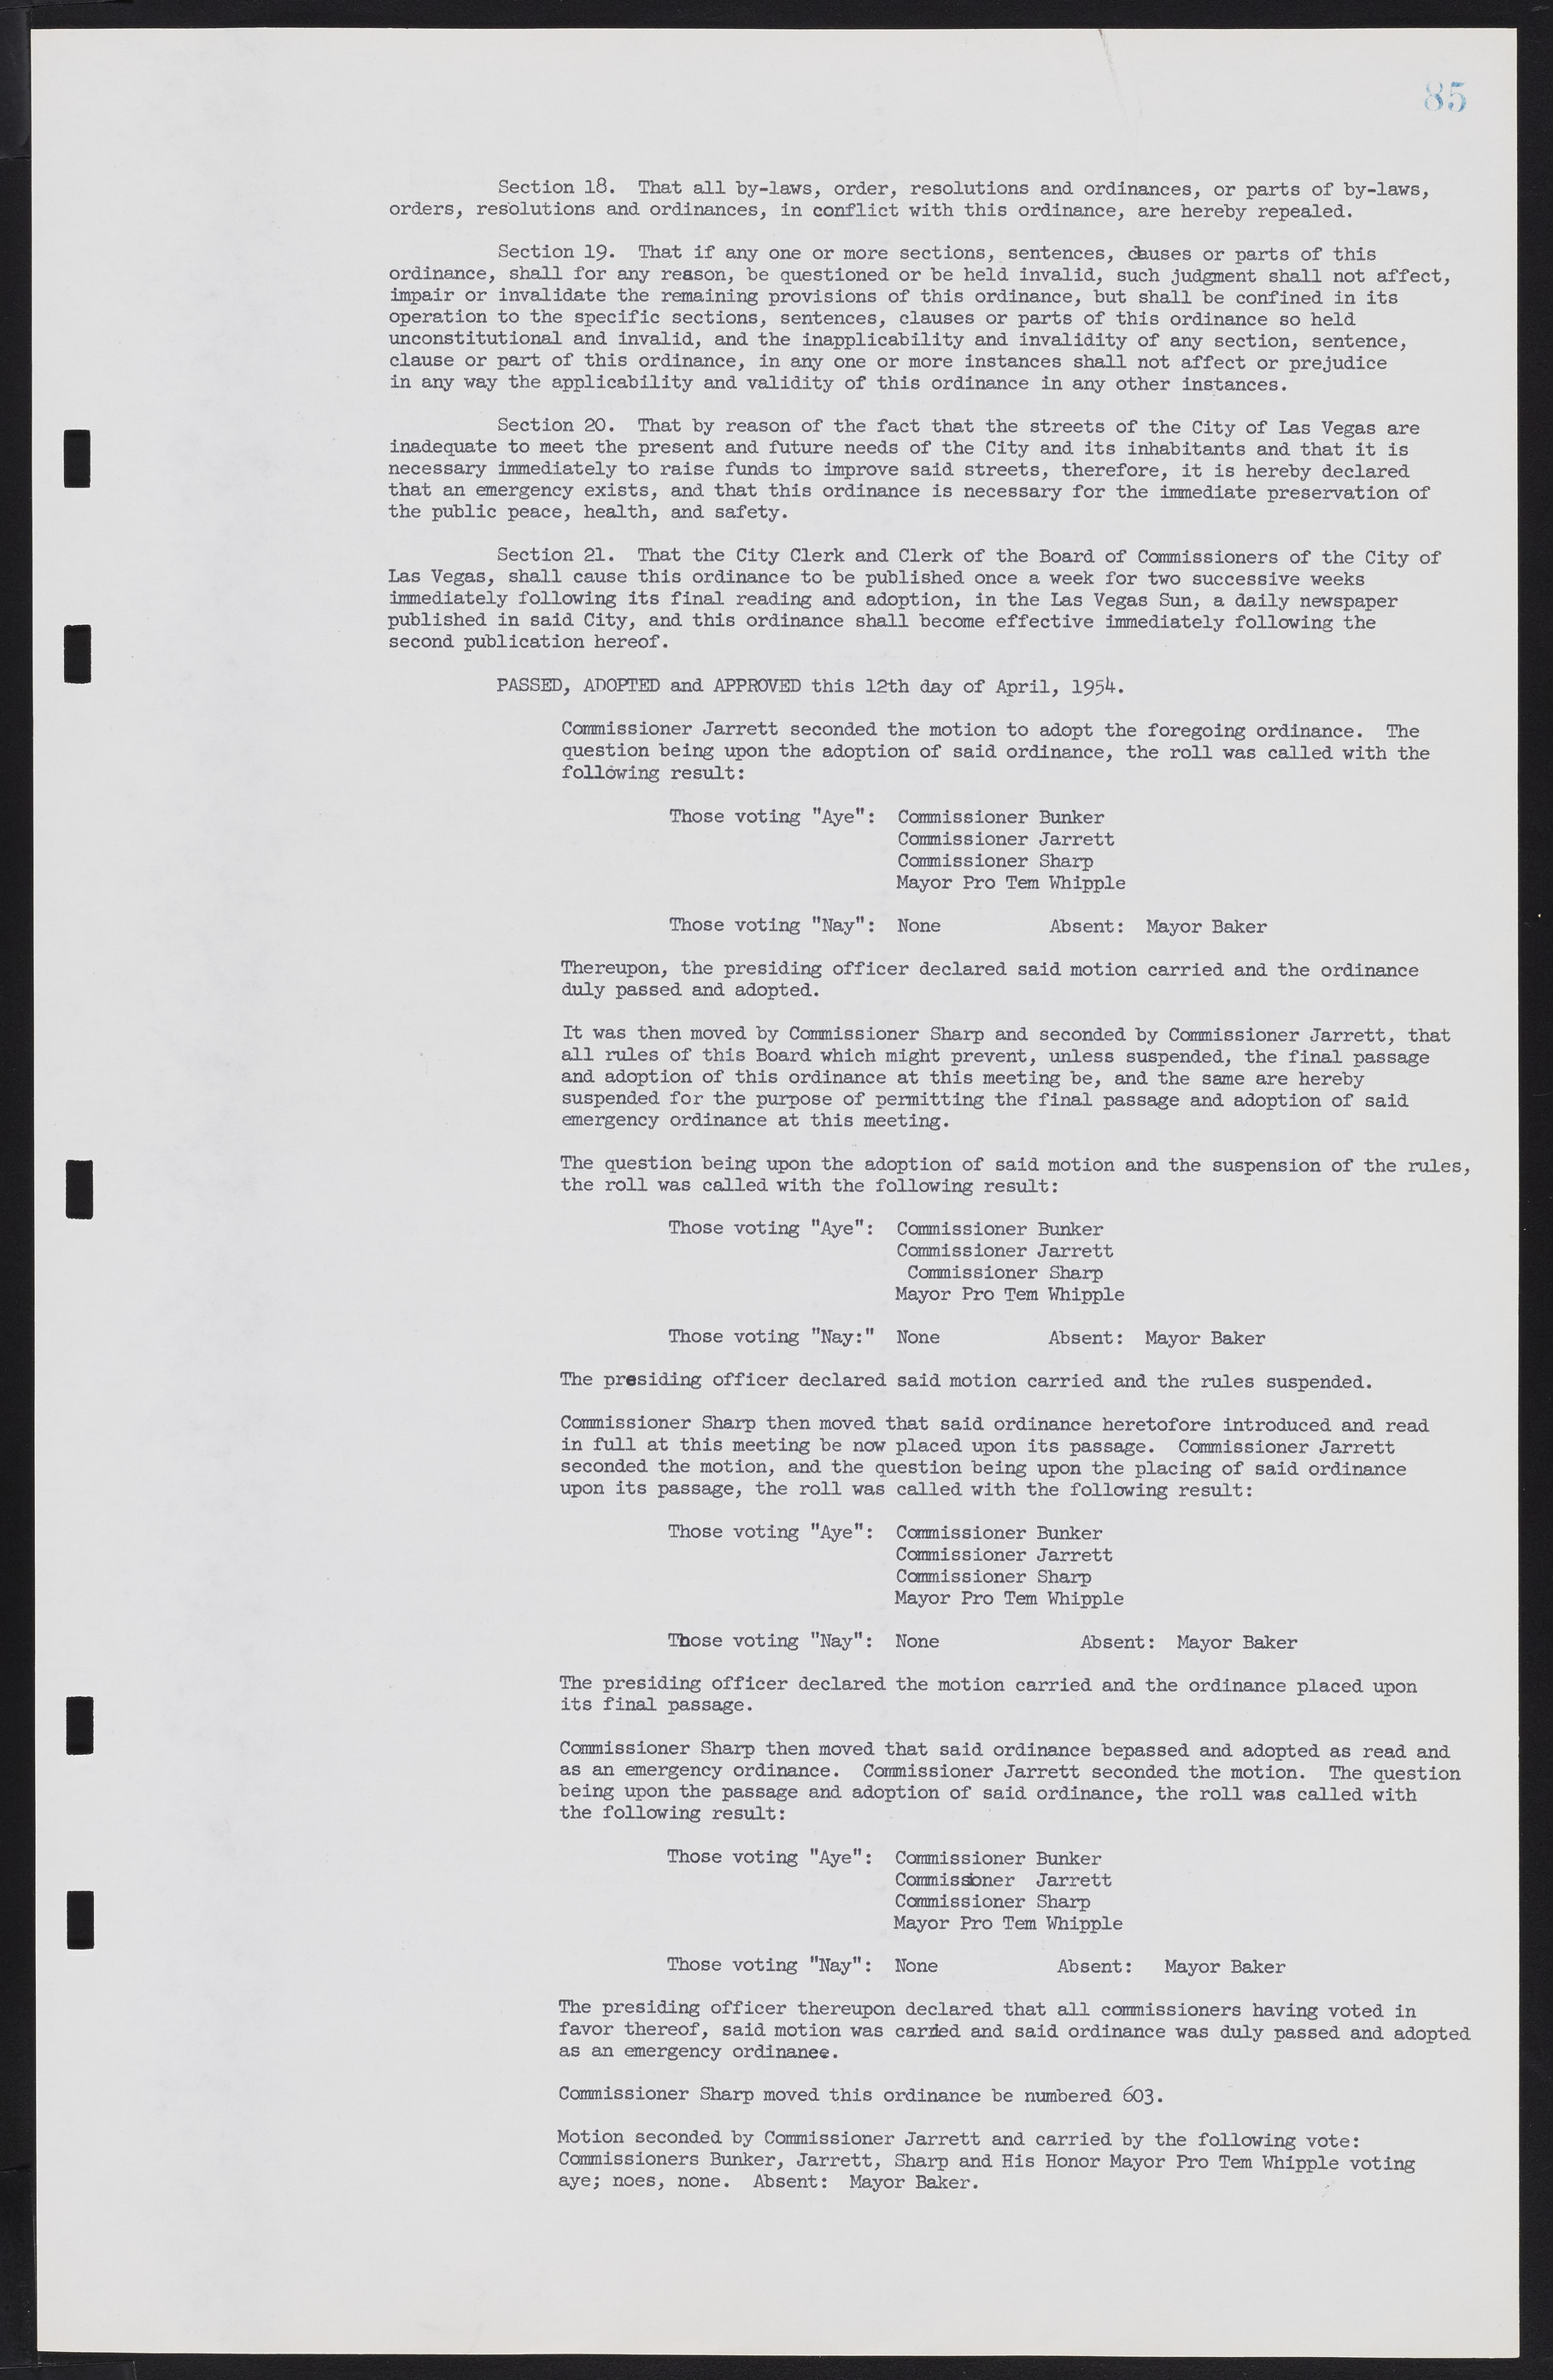 Las Vegas City Commission Minutes, February 17, 1954 to September 21, 1955, lvc000009-89